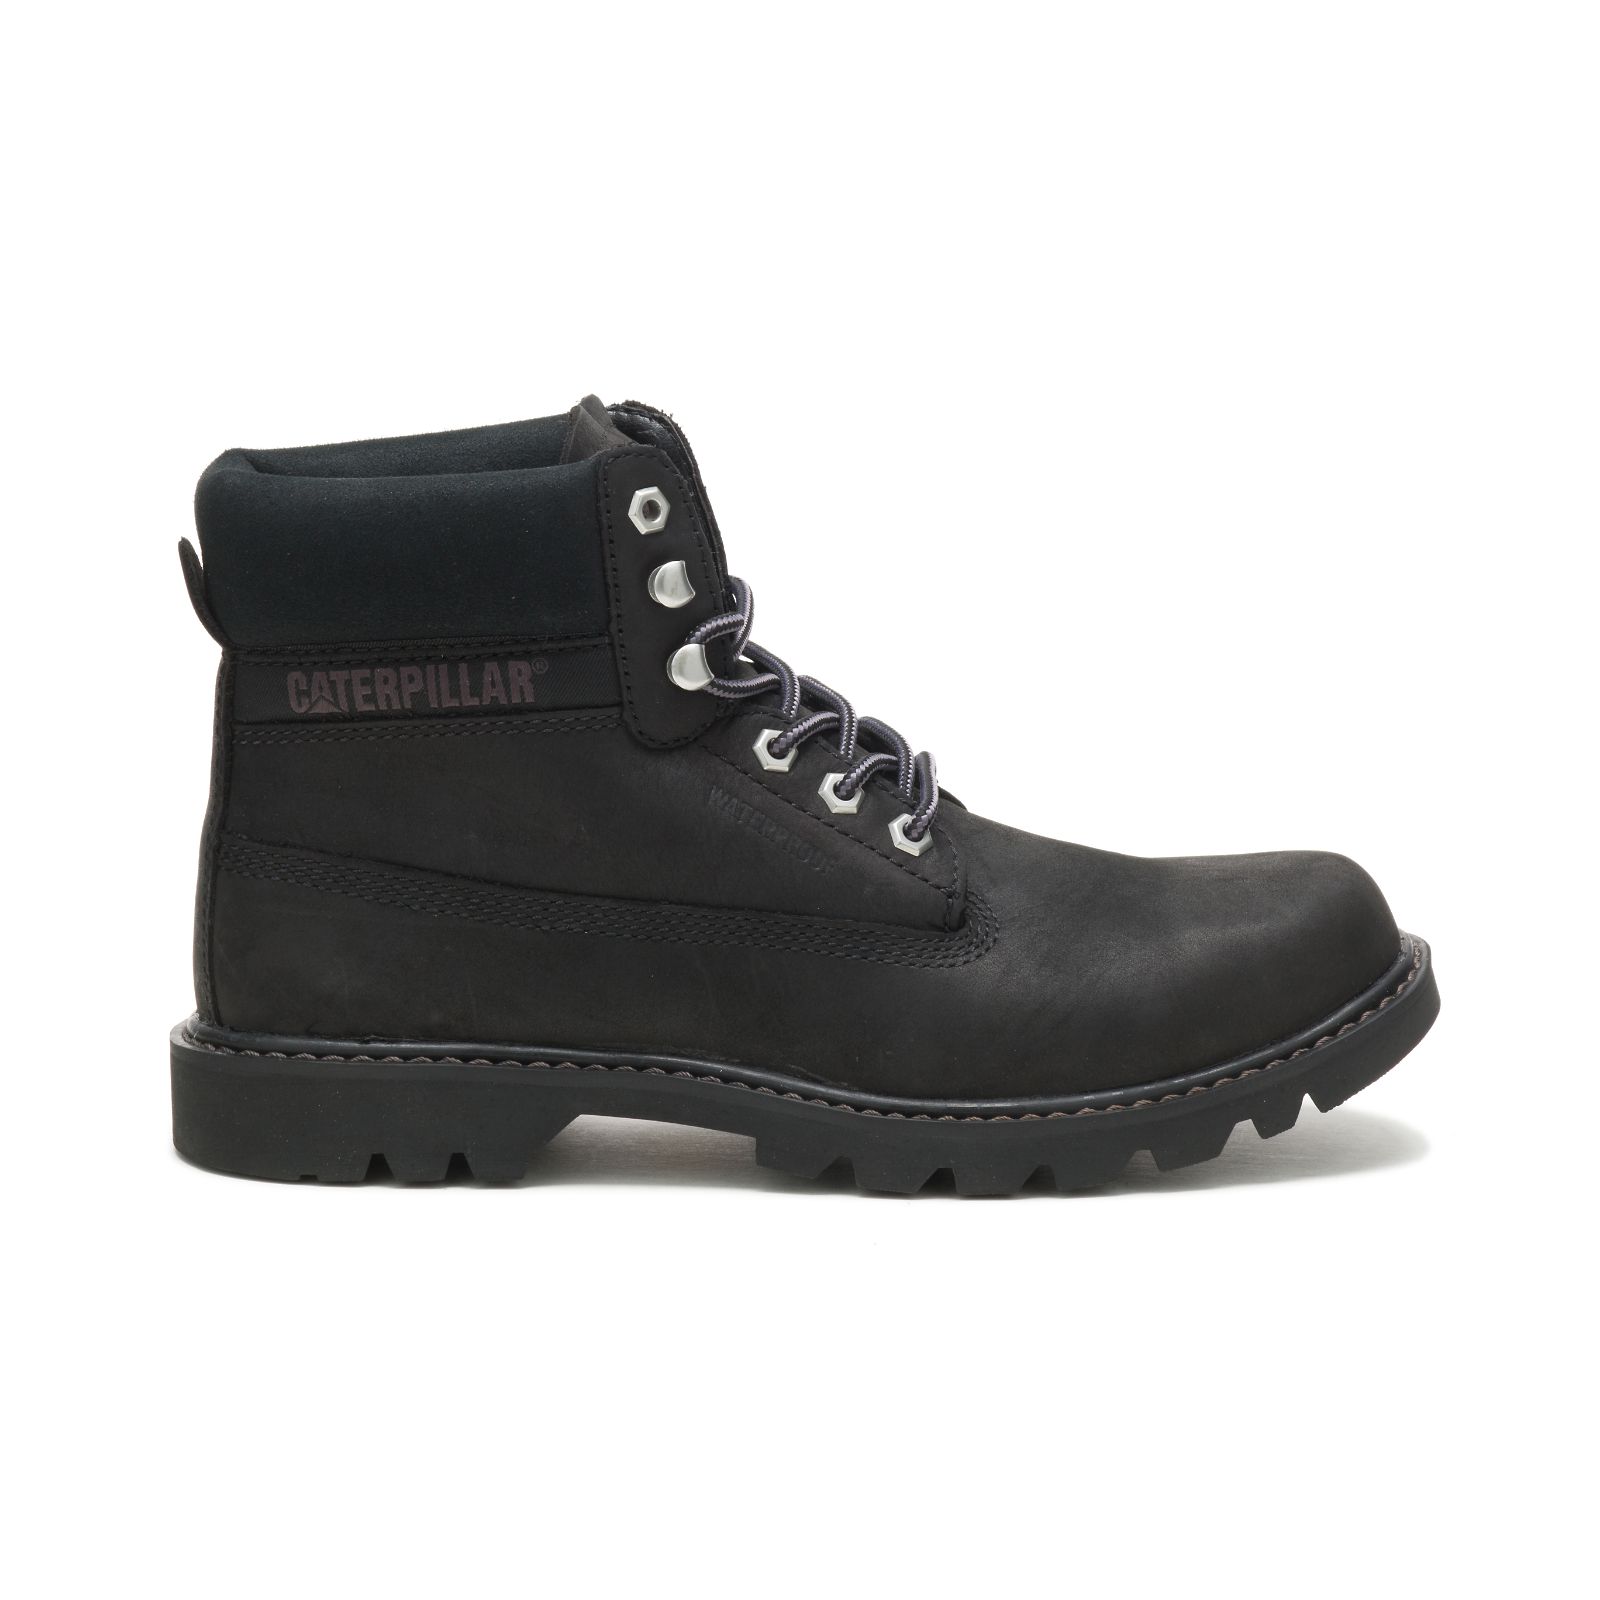 Black Caterpillar Ecolorado Waterproof Women's Work Boots | Cat-293487